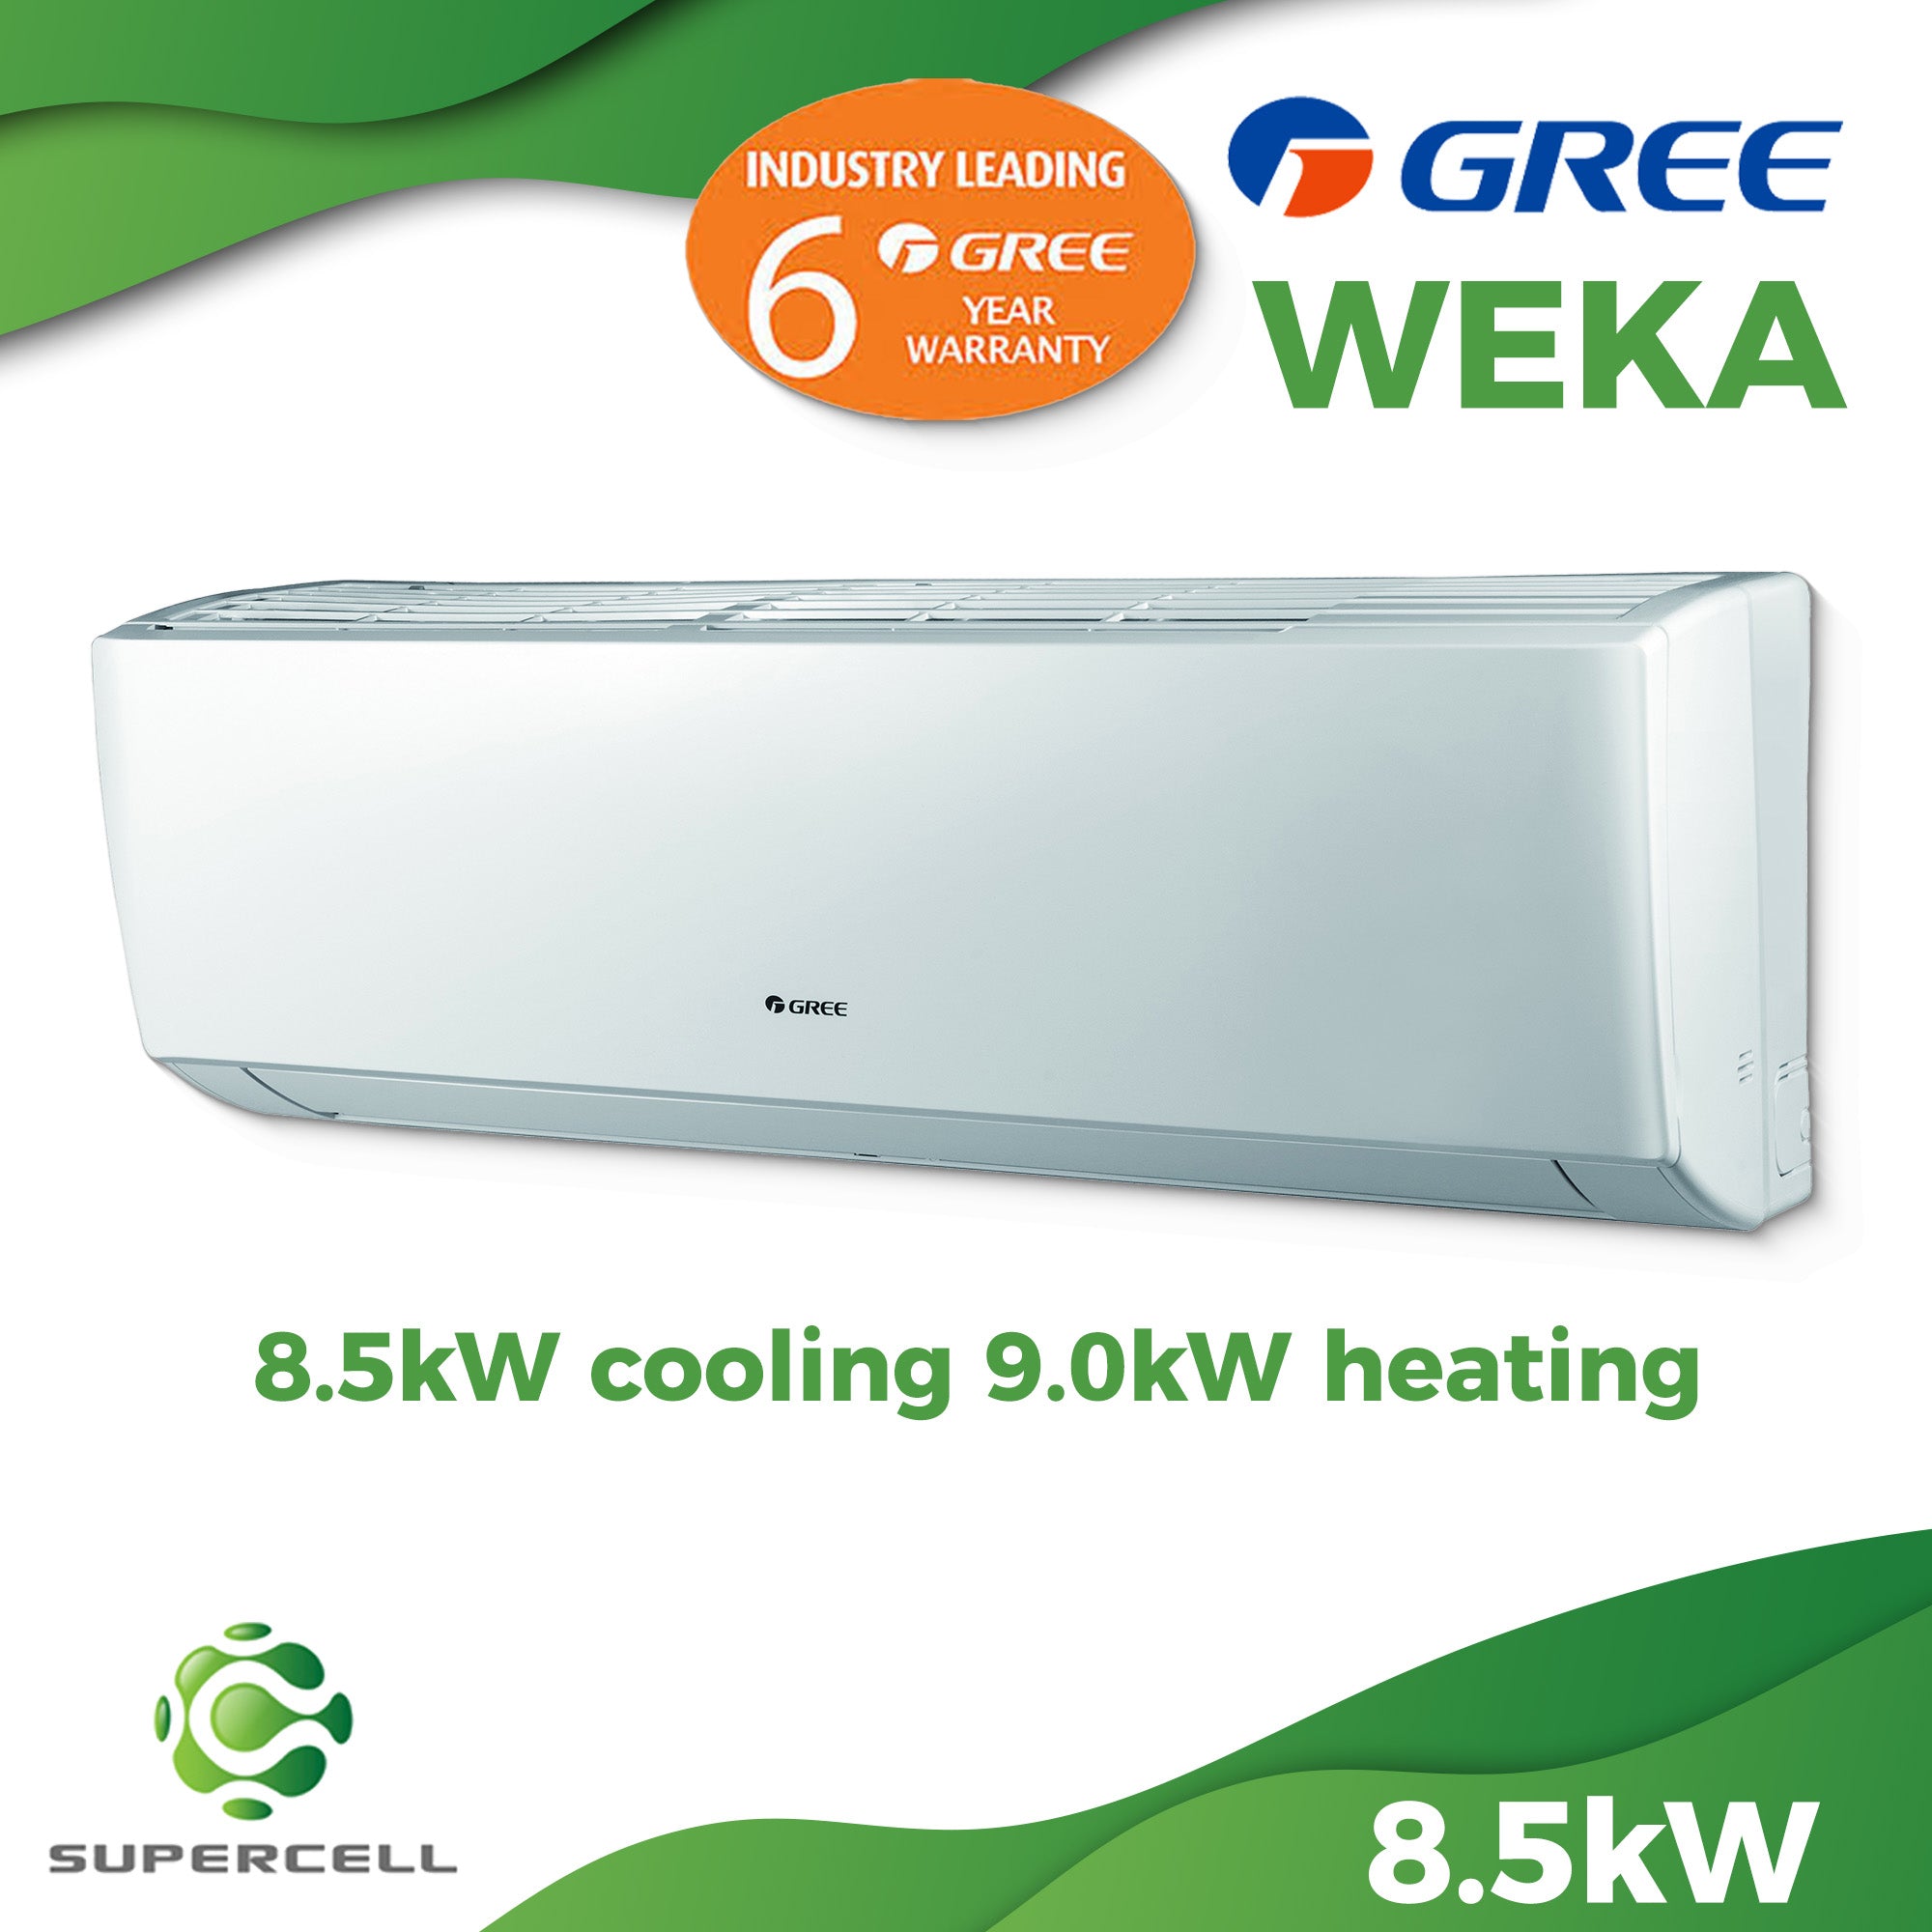 Gree WEKA Heat Pump 8.5kW Cooling 9kW Heating - supercellnz